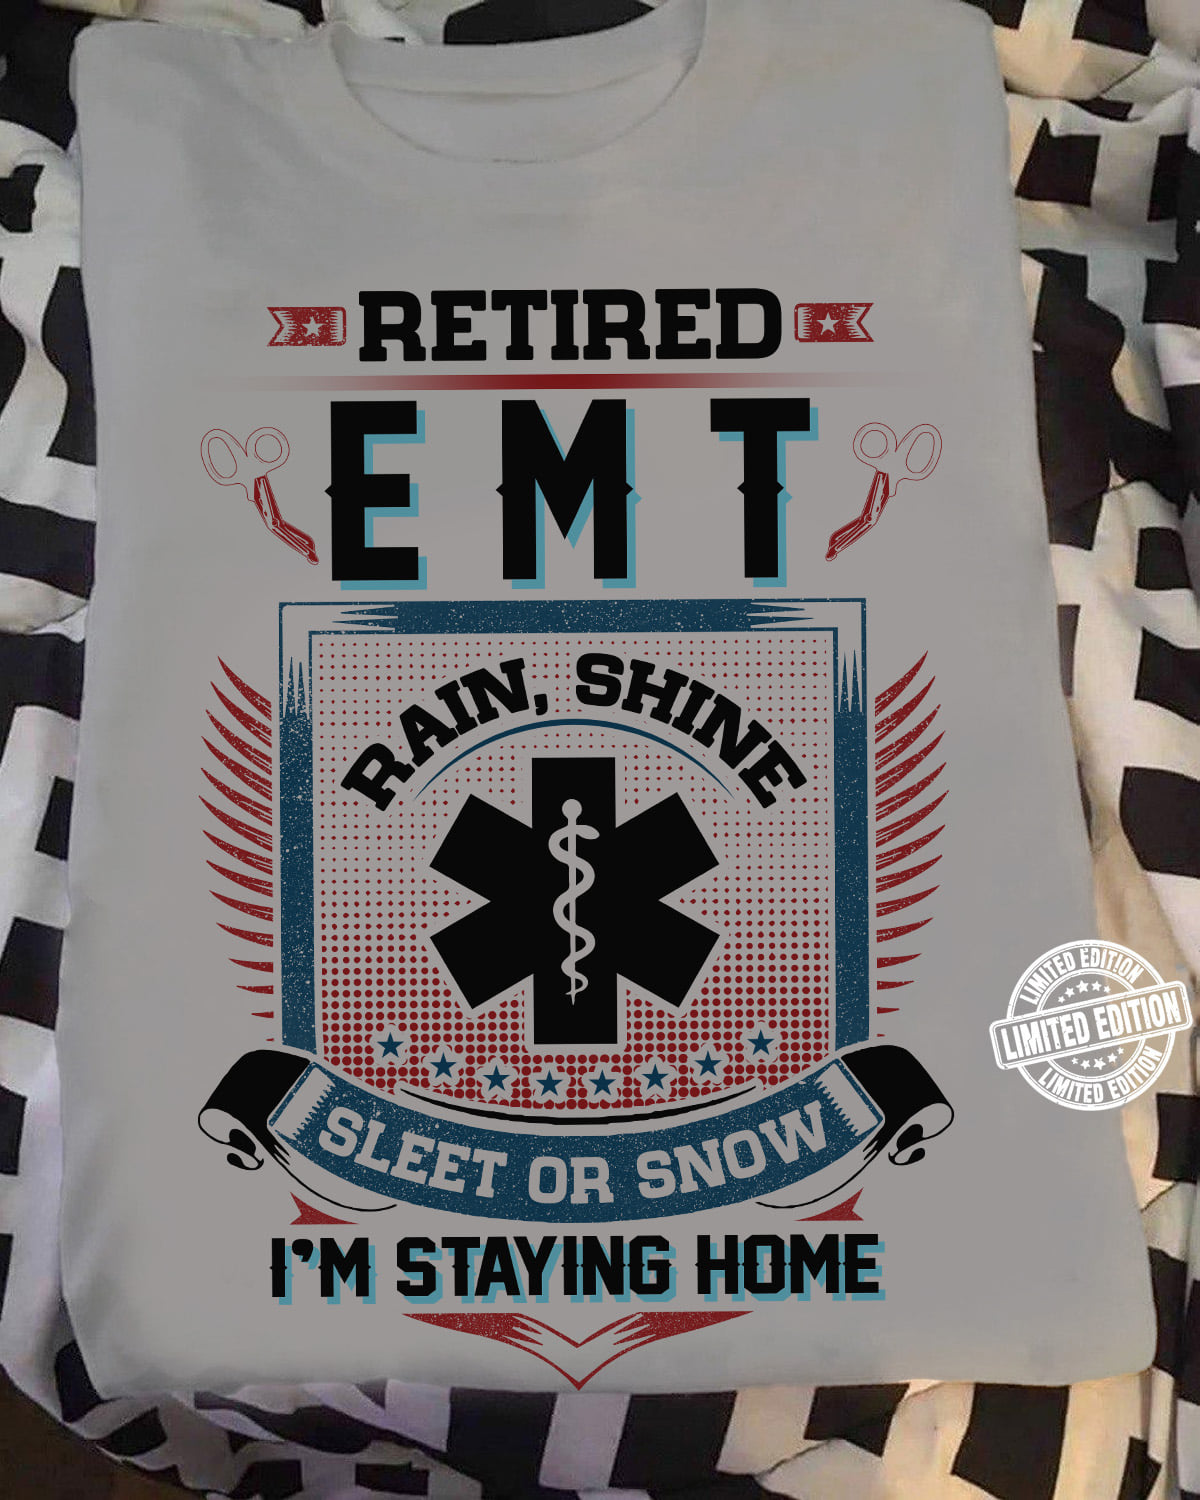 Retired EMT rain shine sleet or snow i'm staying home Shirt, Hoodie ...